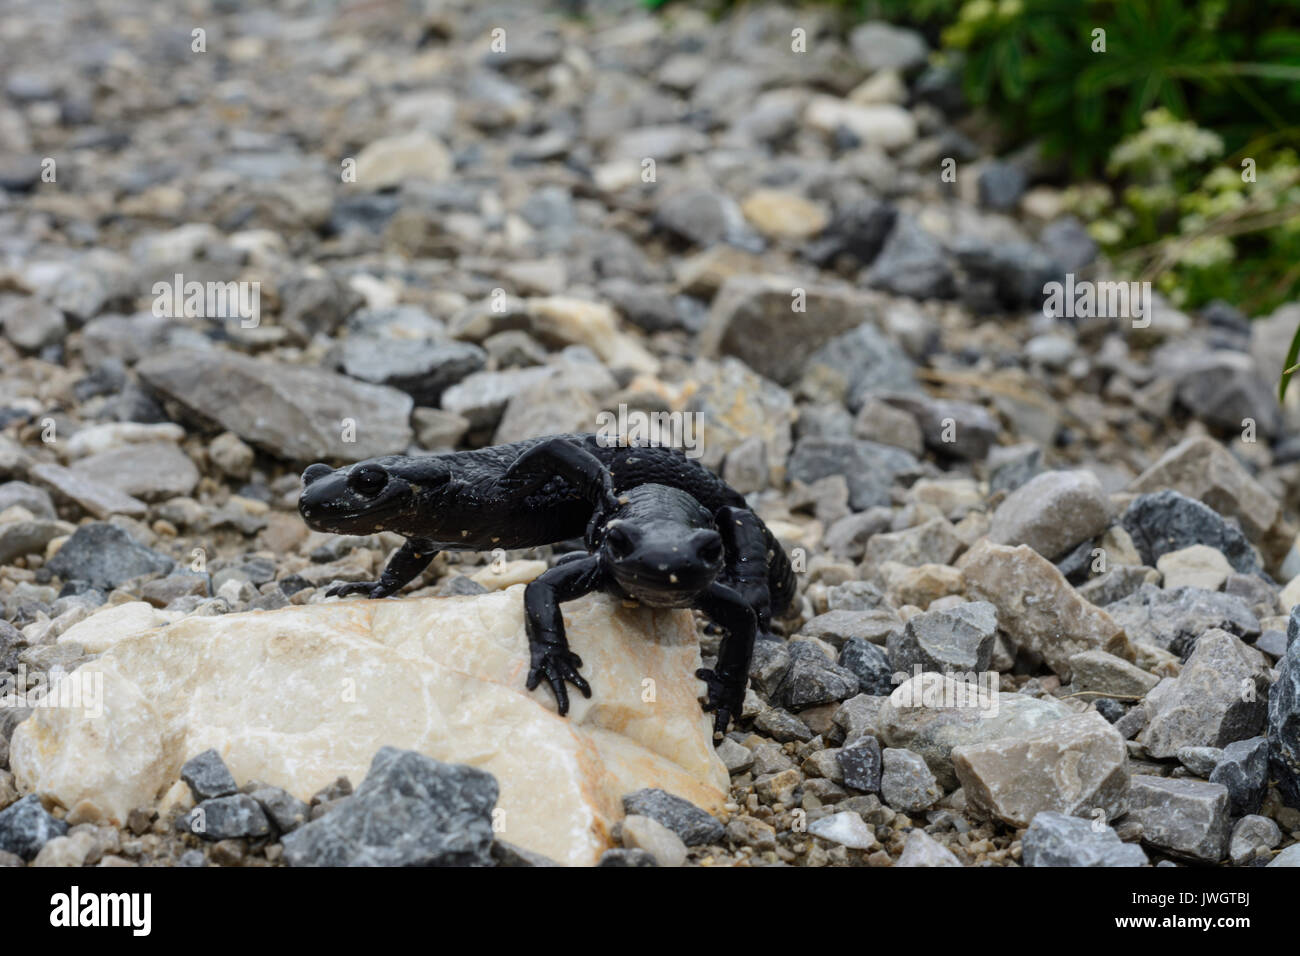 Alpensalamander (salamandre alpestre, Salamandra atra), Untersberg, Flachgau, Salzbourg, Autriche Banque D'Images